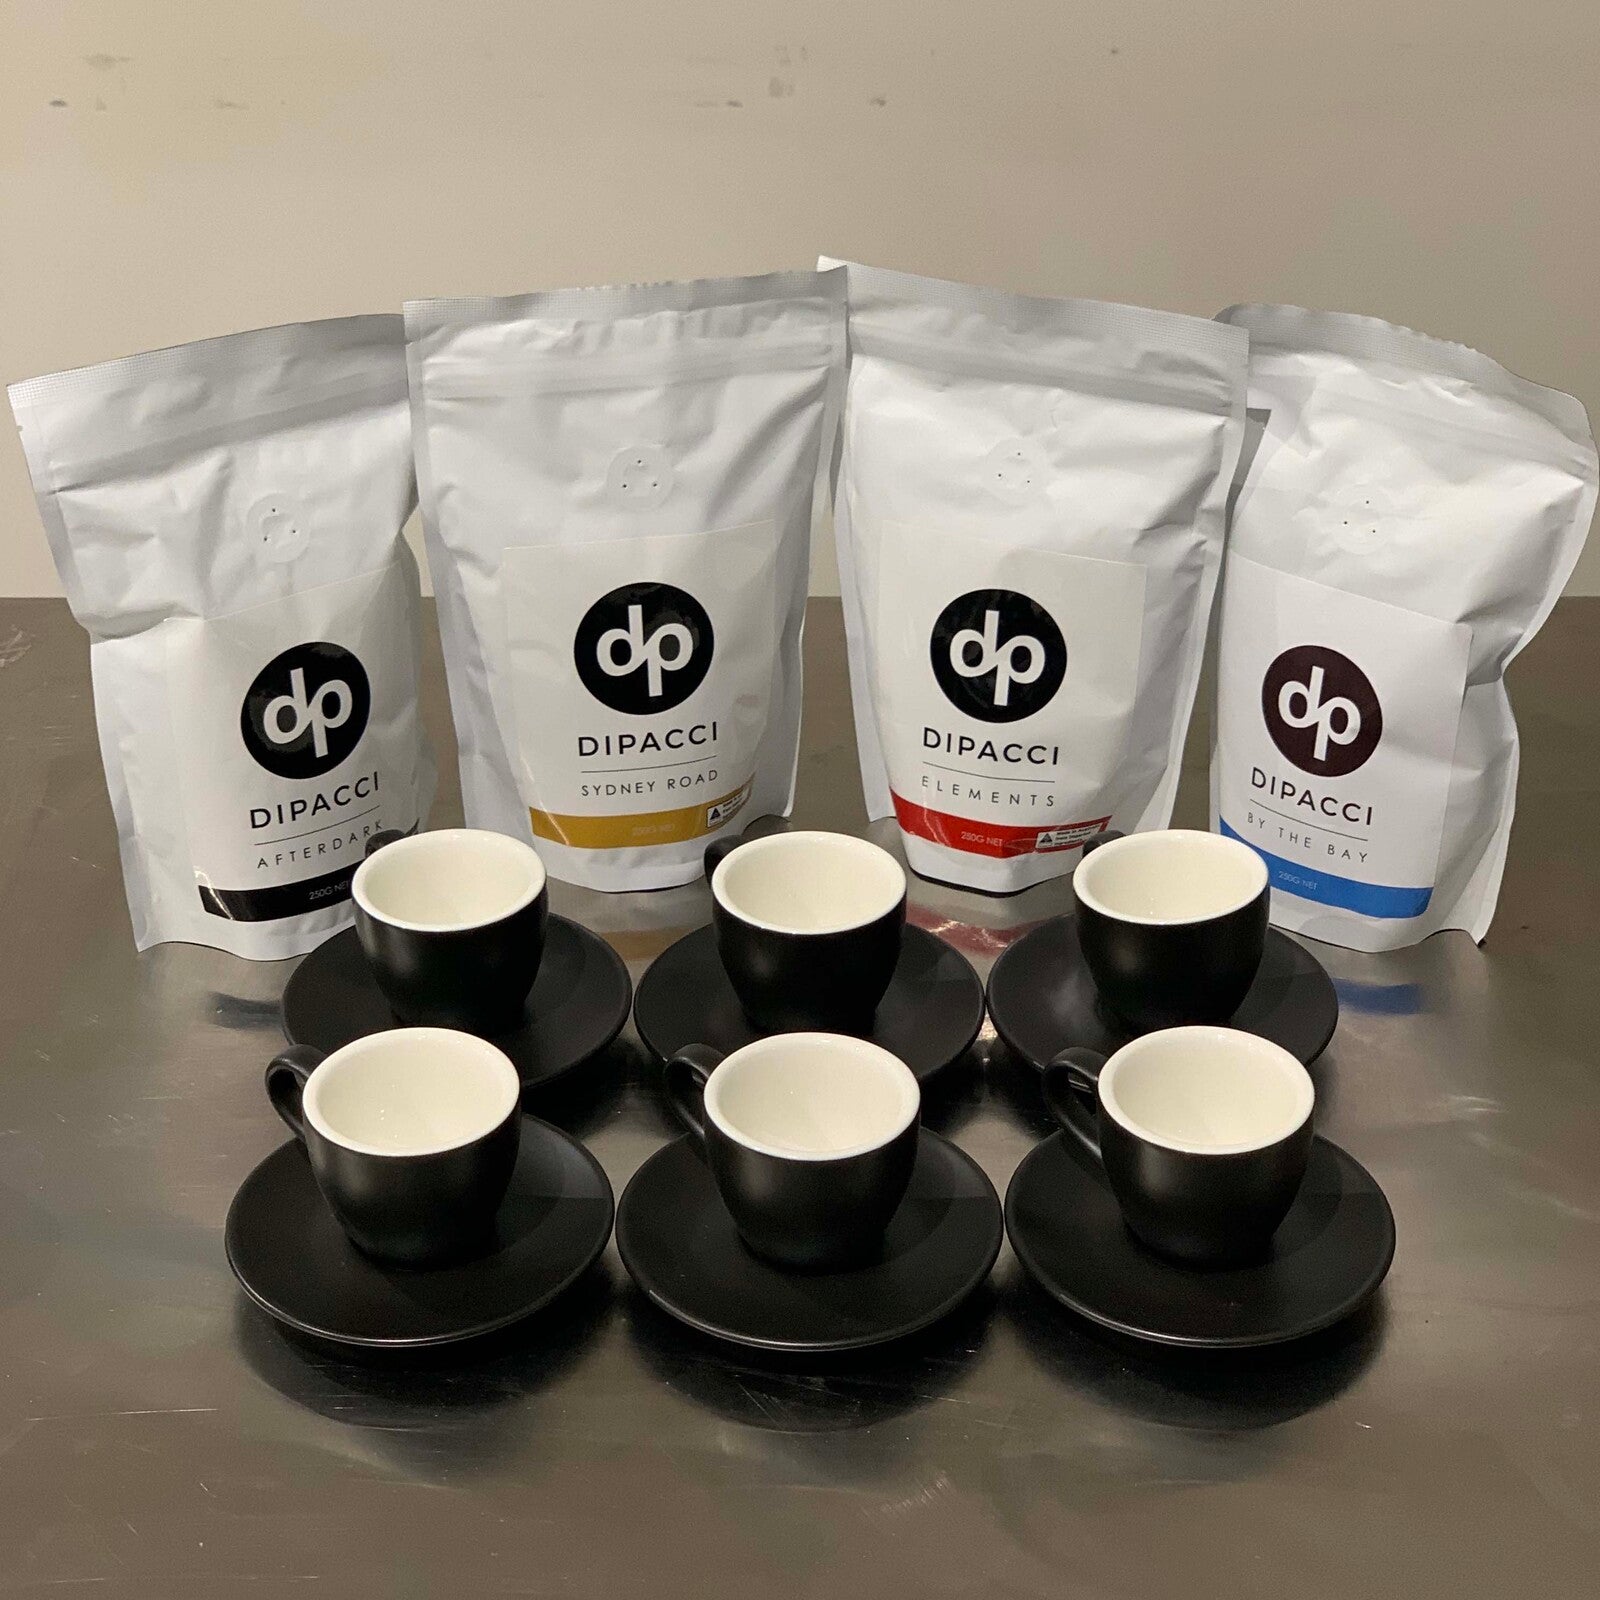 Dipacci Coffee Co. Dipacci Coffee Sample Pack with Free Mug Set